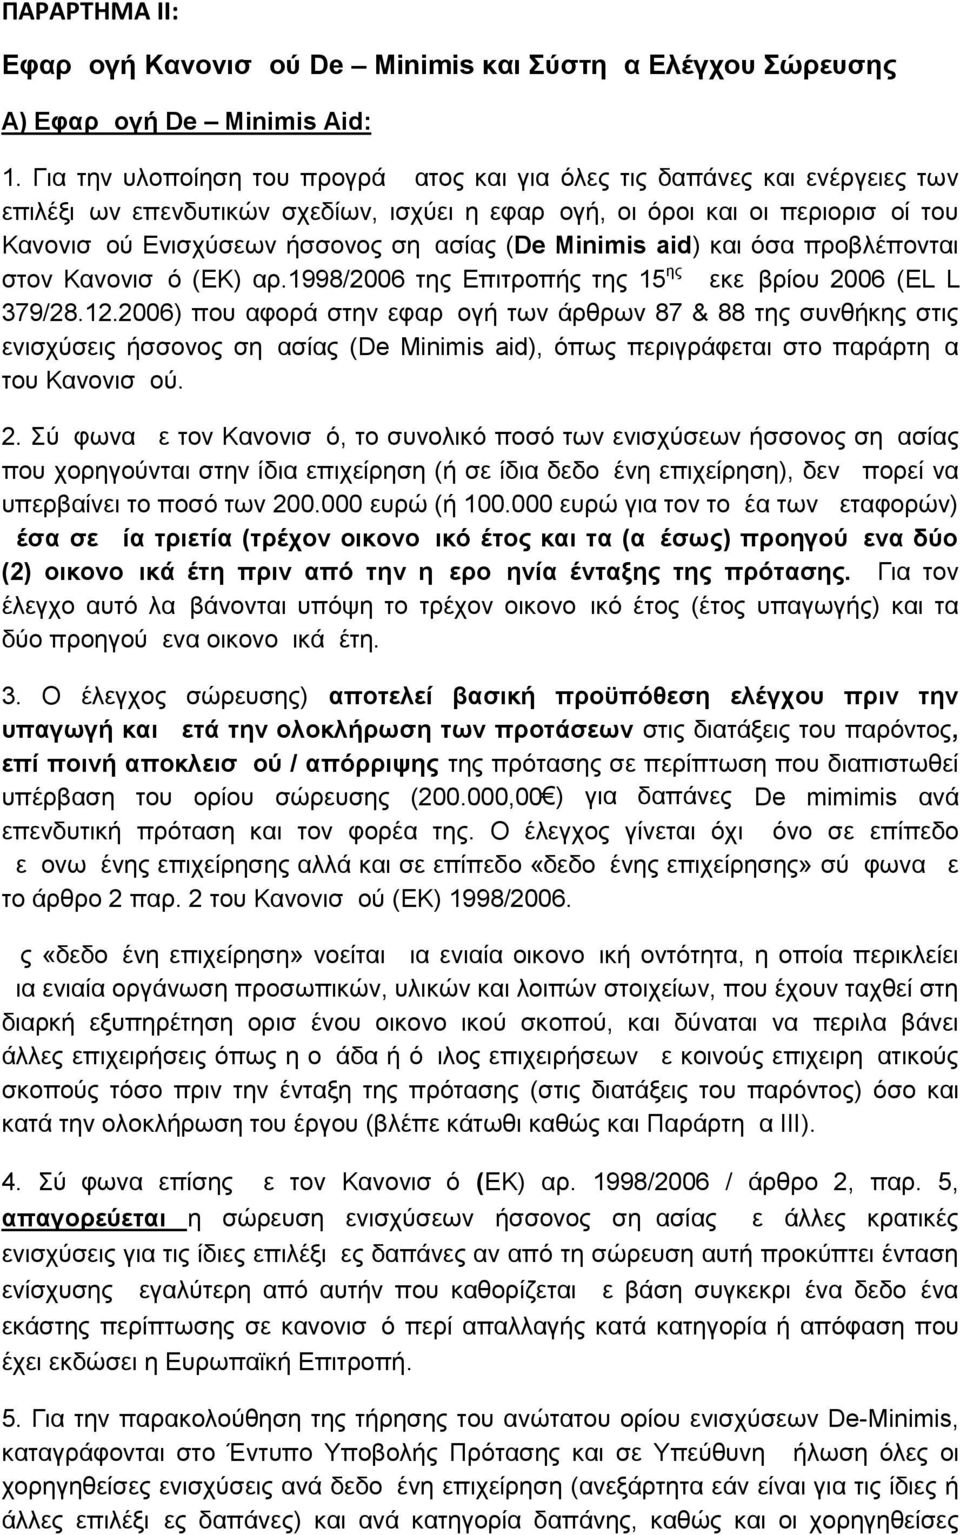 ( De Minimis aid) και όσα προβλέπονται στον Κανονισμό (ΕΚ) αρ.1998/2006 της Επιτροπής της 15 ης Δεκεμβρίου 2006 ( EL L 379/28.12.